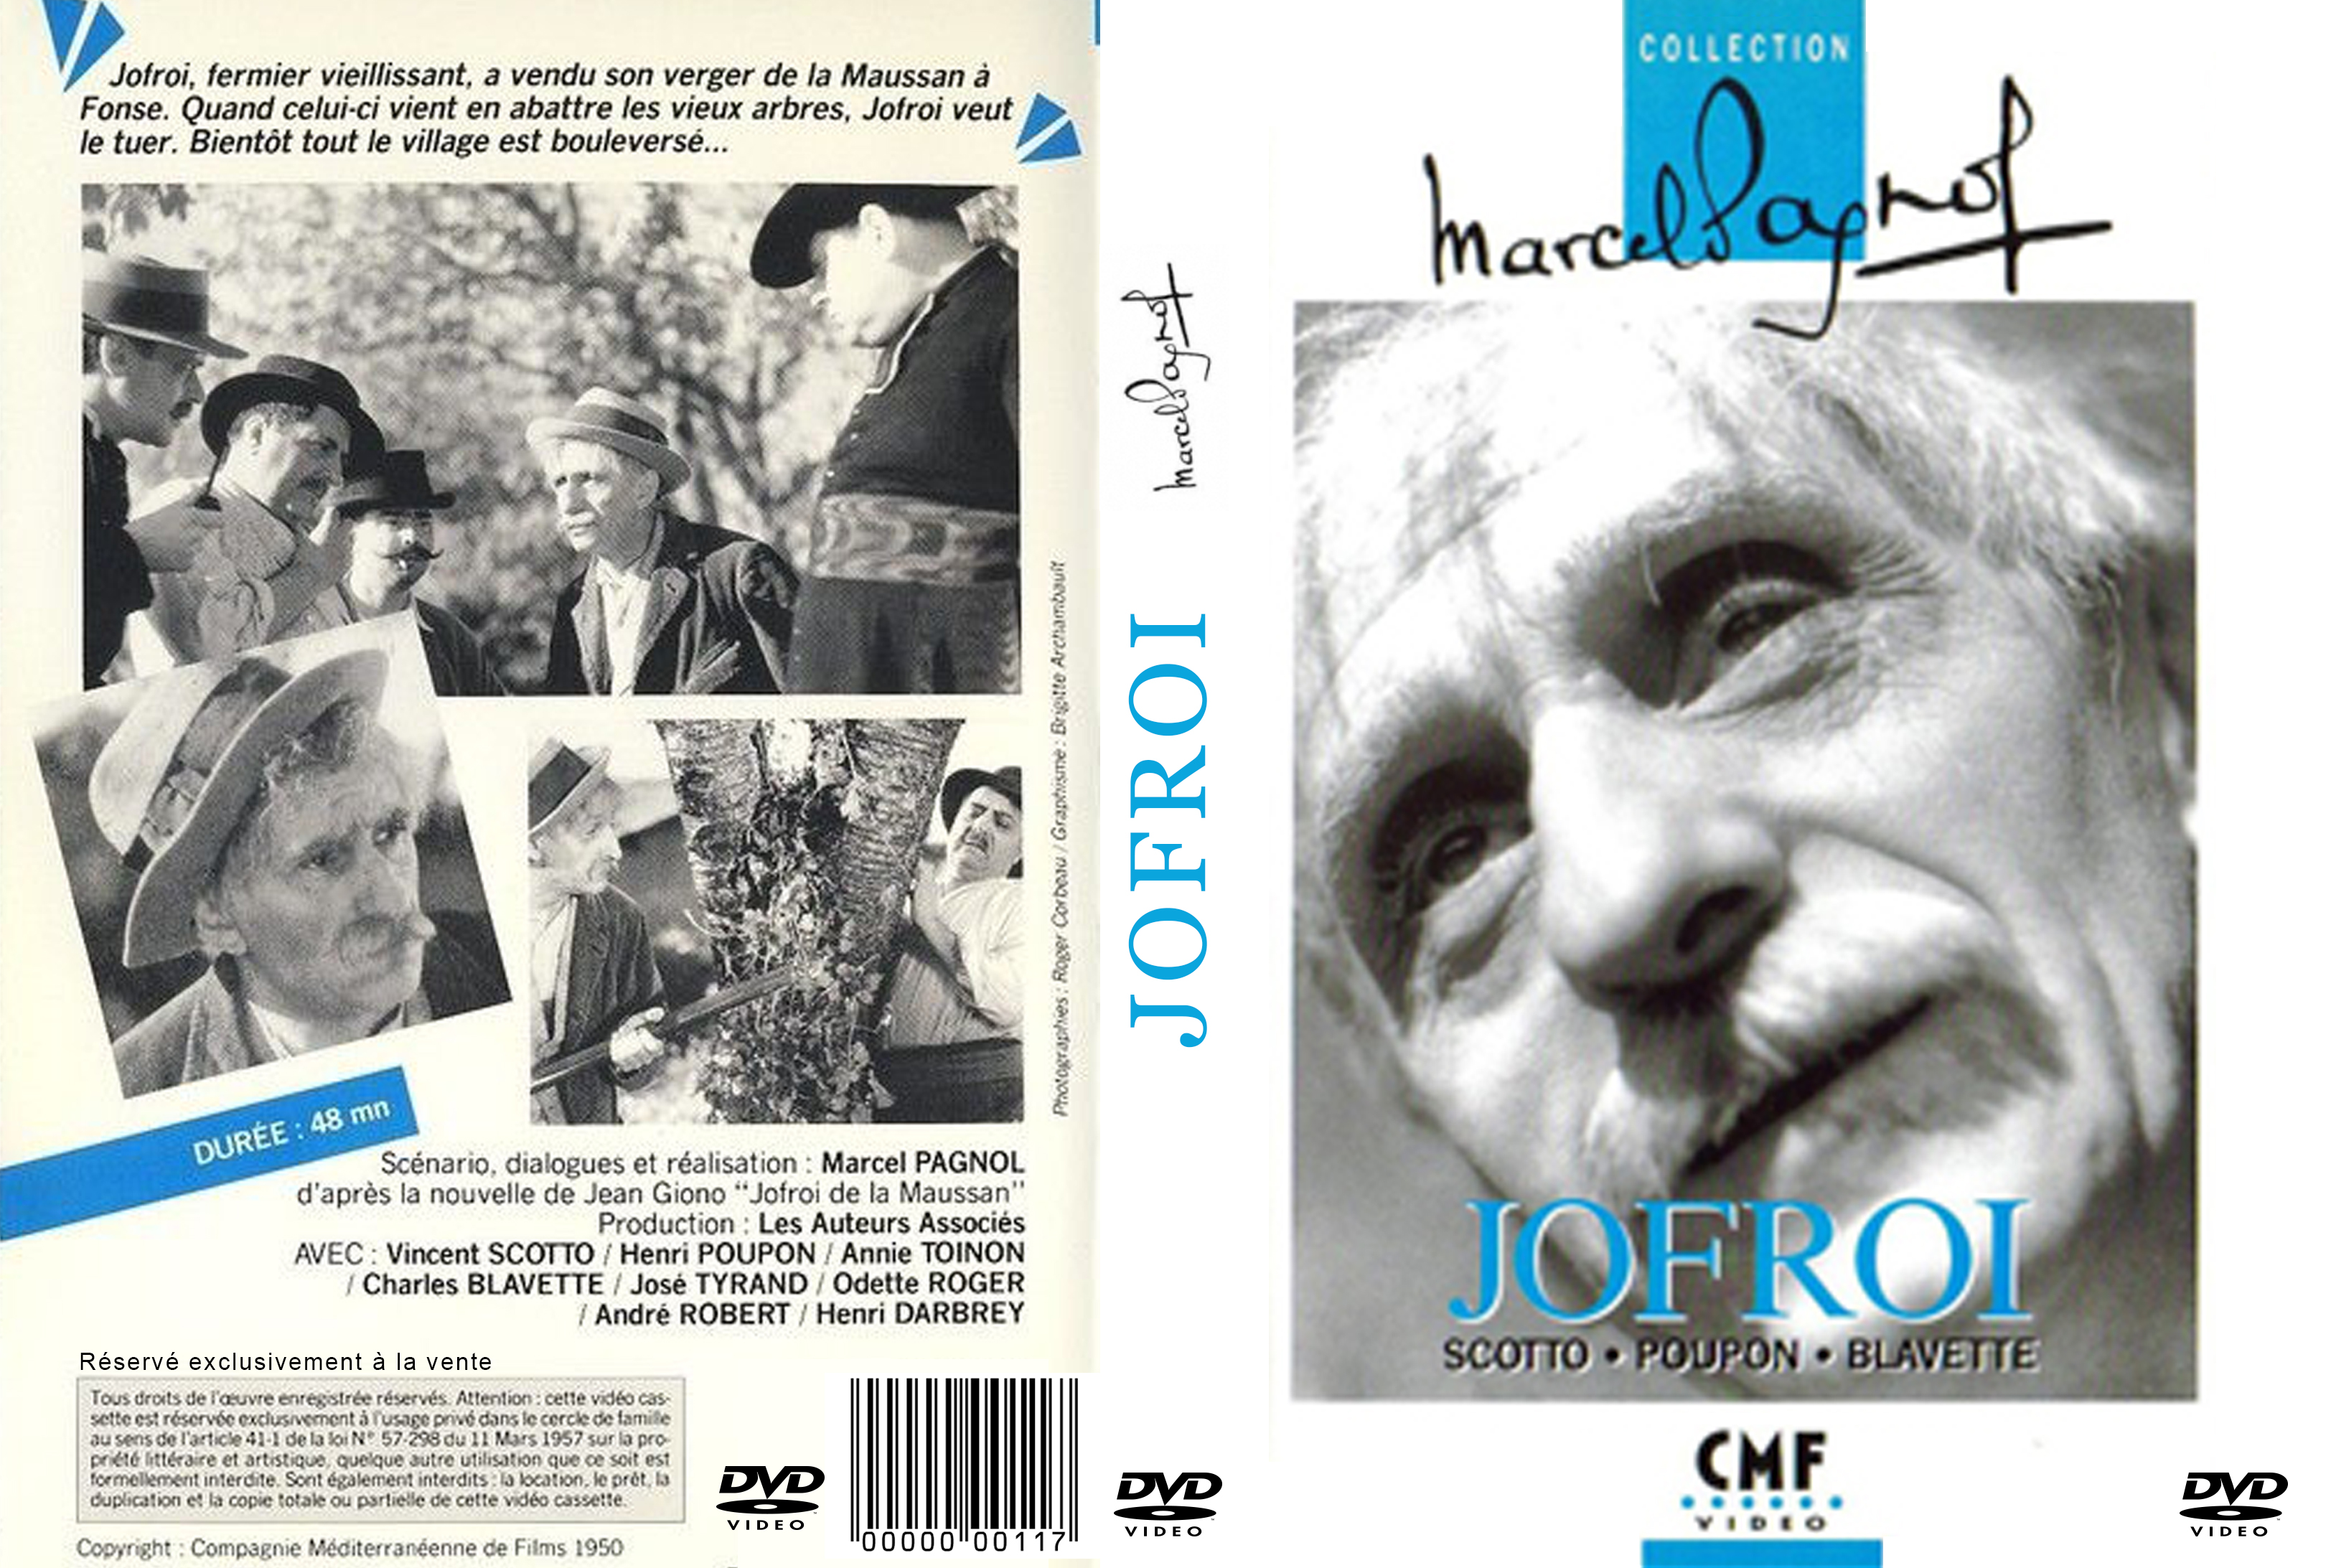 Jaquette DVD Jofroi custom